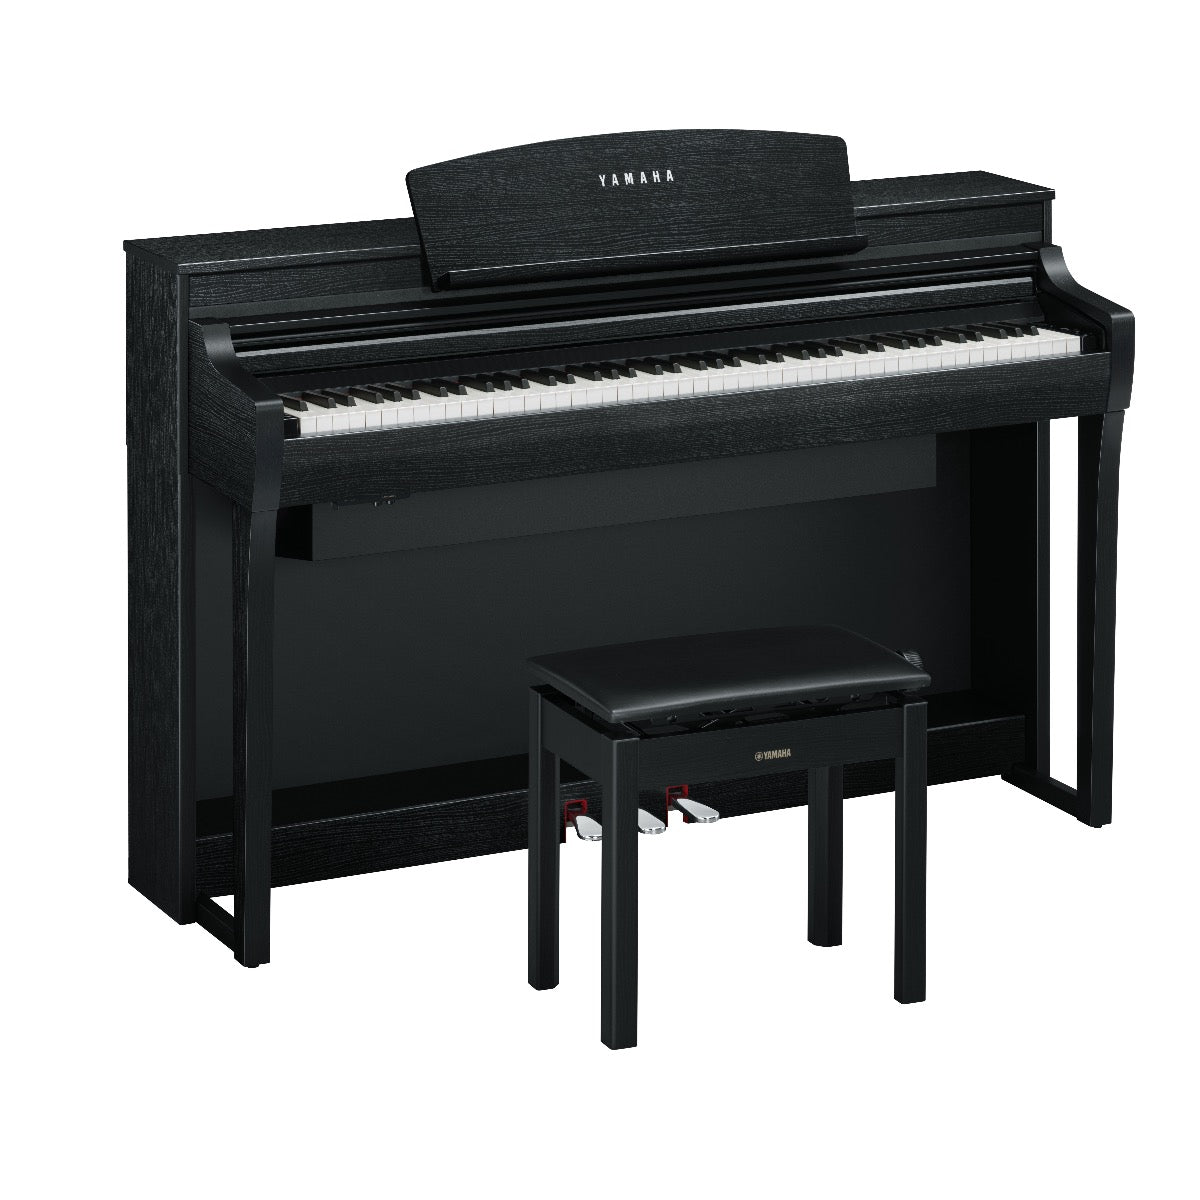 Yamaha Clavinova CSP275B Digital Piano with Bench - Black Walnut, View 2